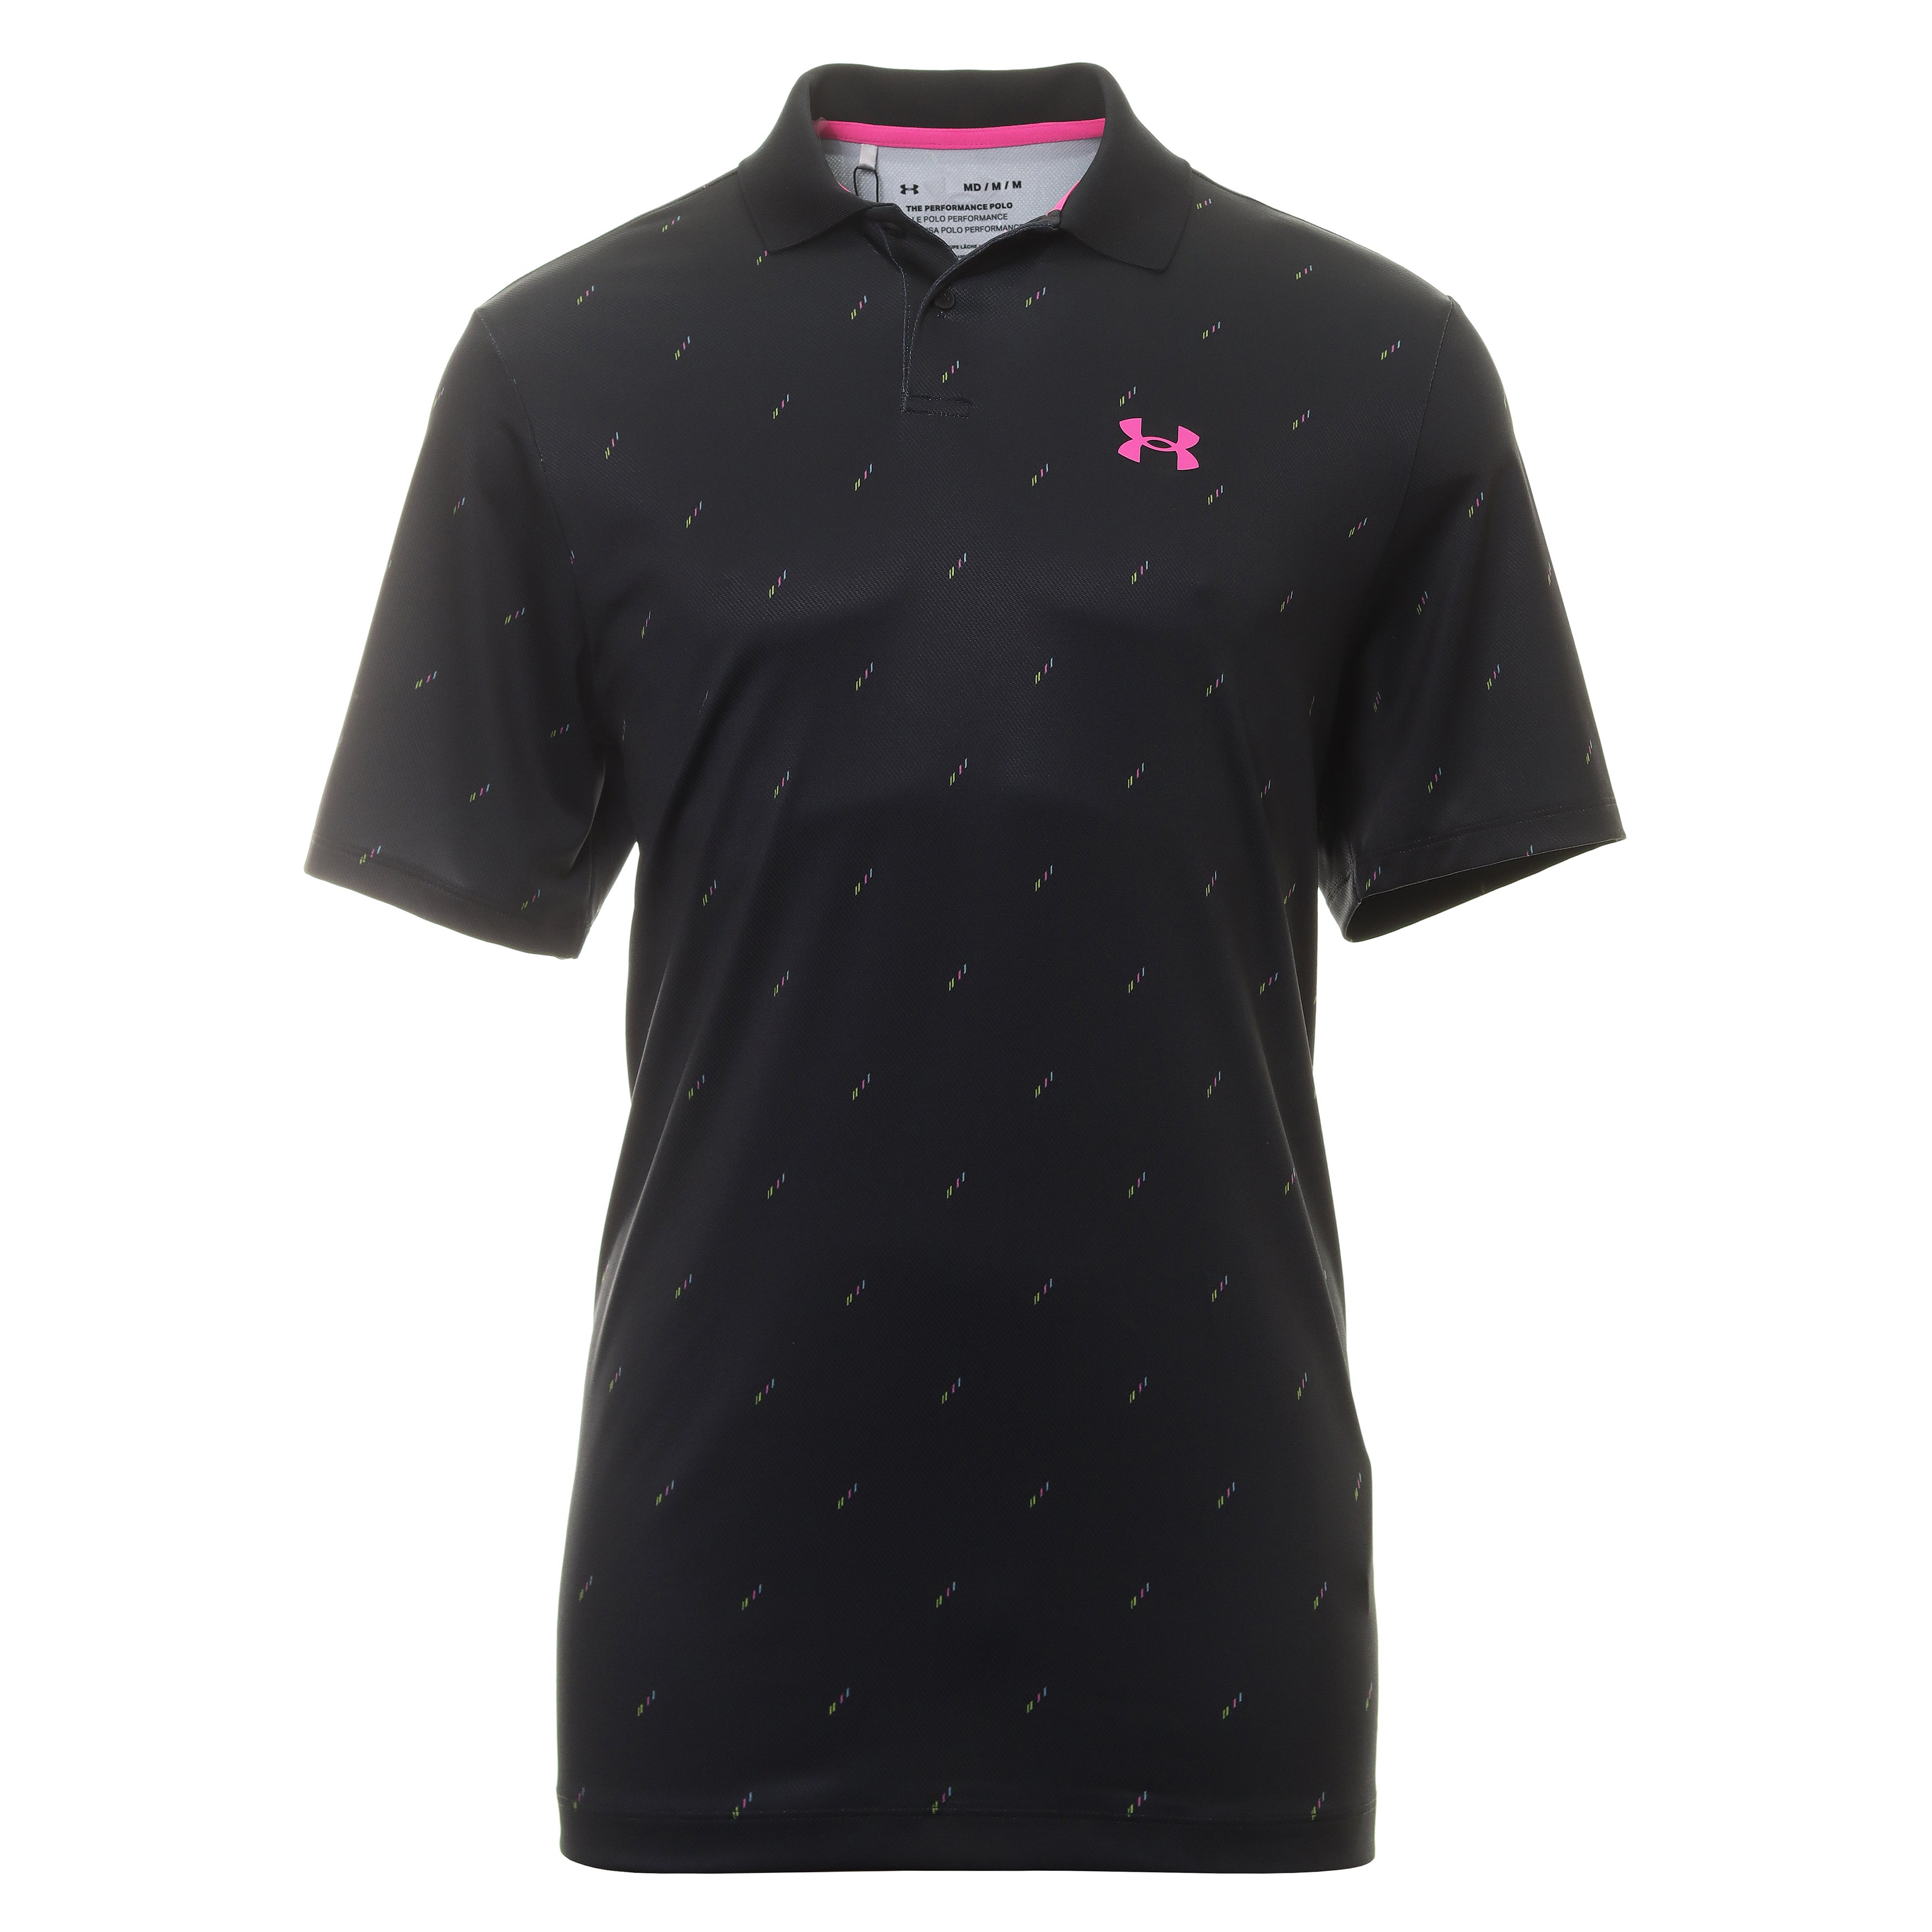 Under Armour Golf Performance 3.0 Dueces Shirt Black Still Rebel Pink 001 | Function18